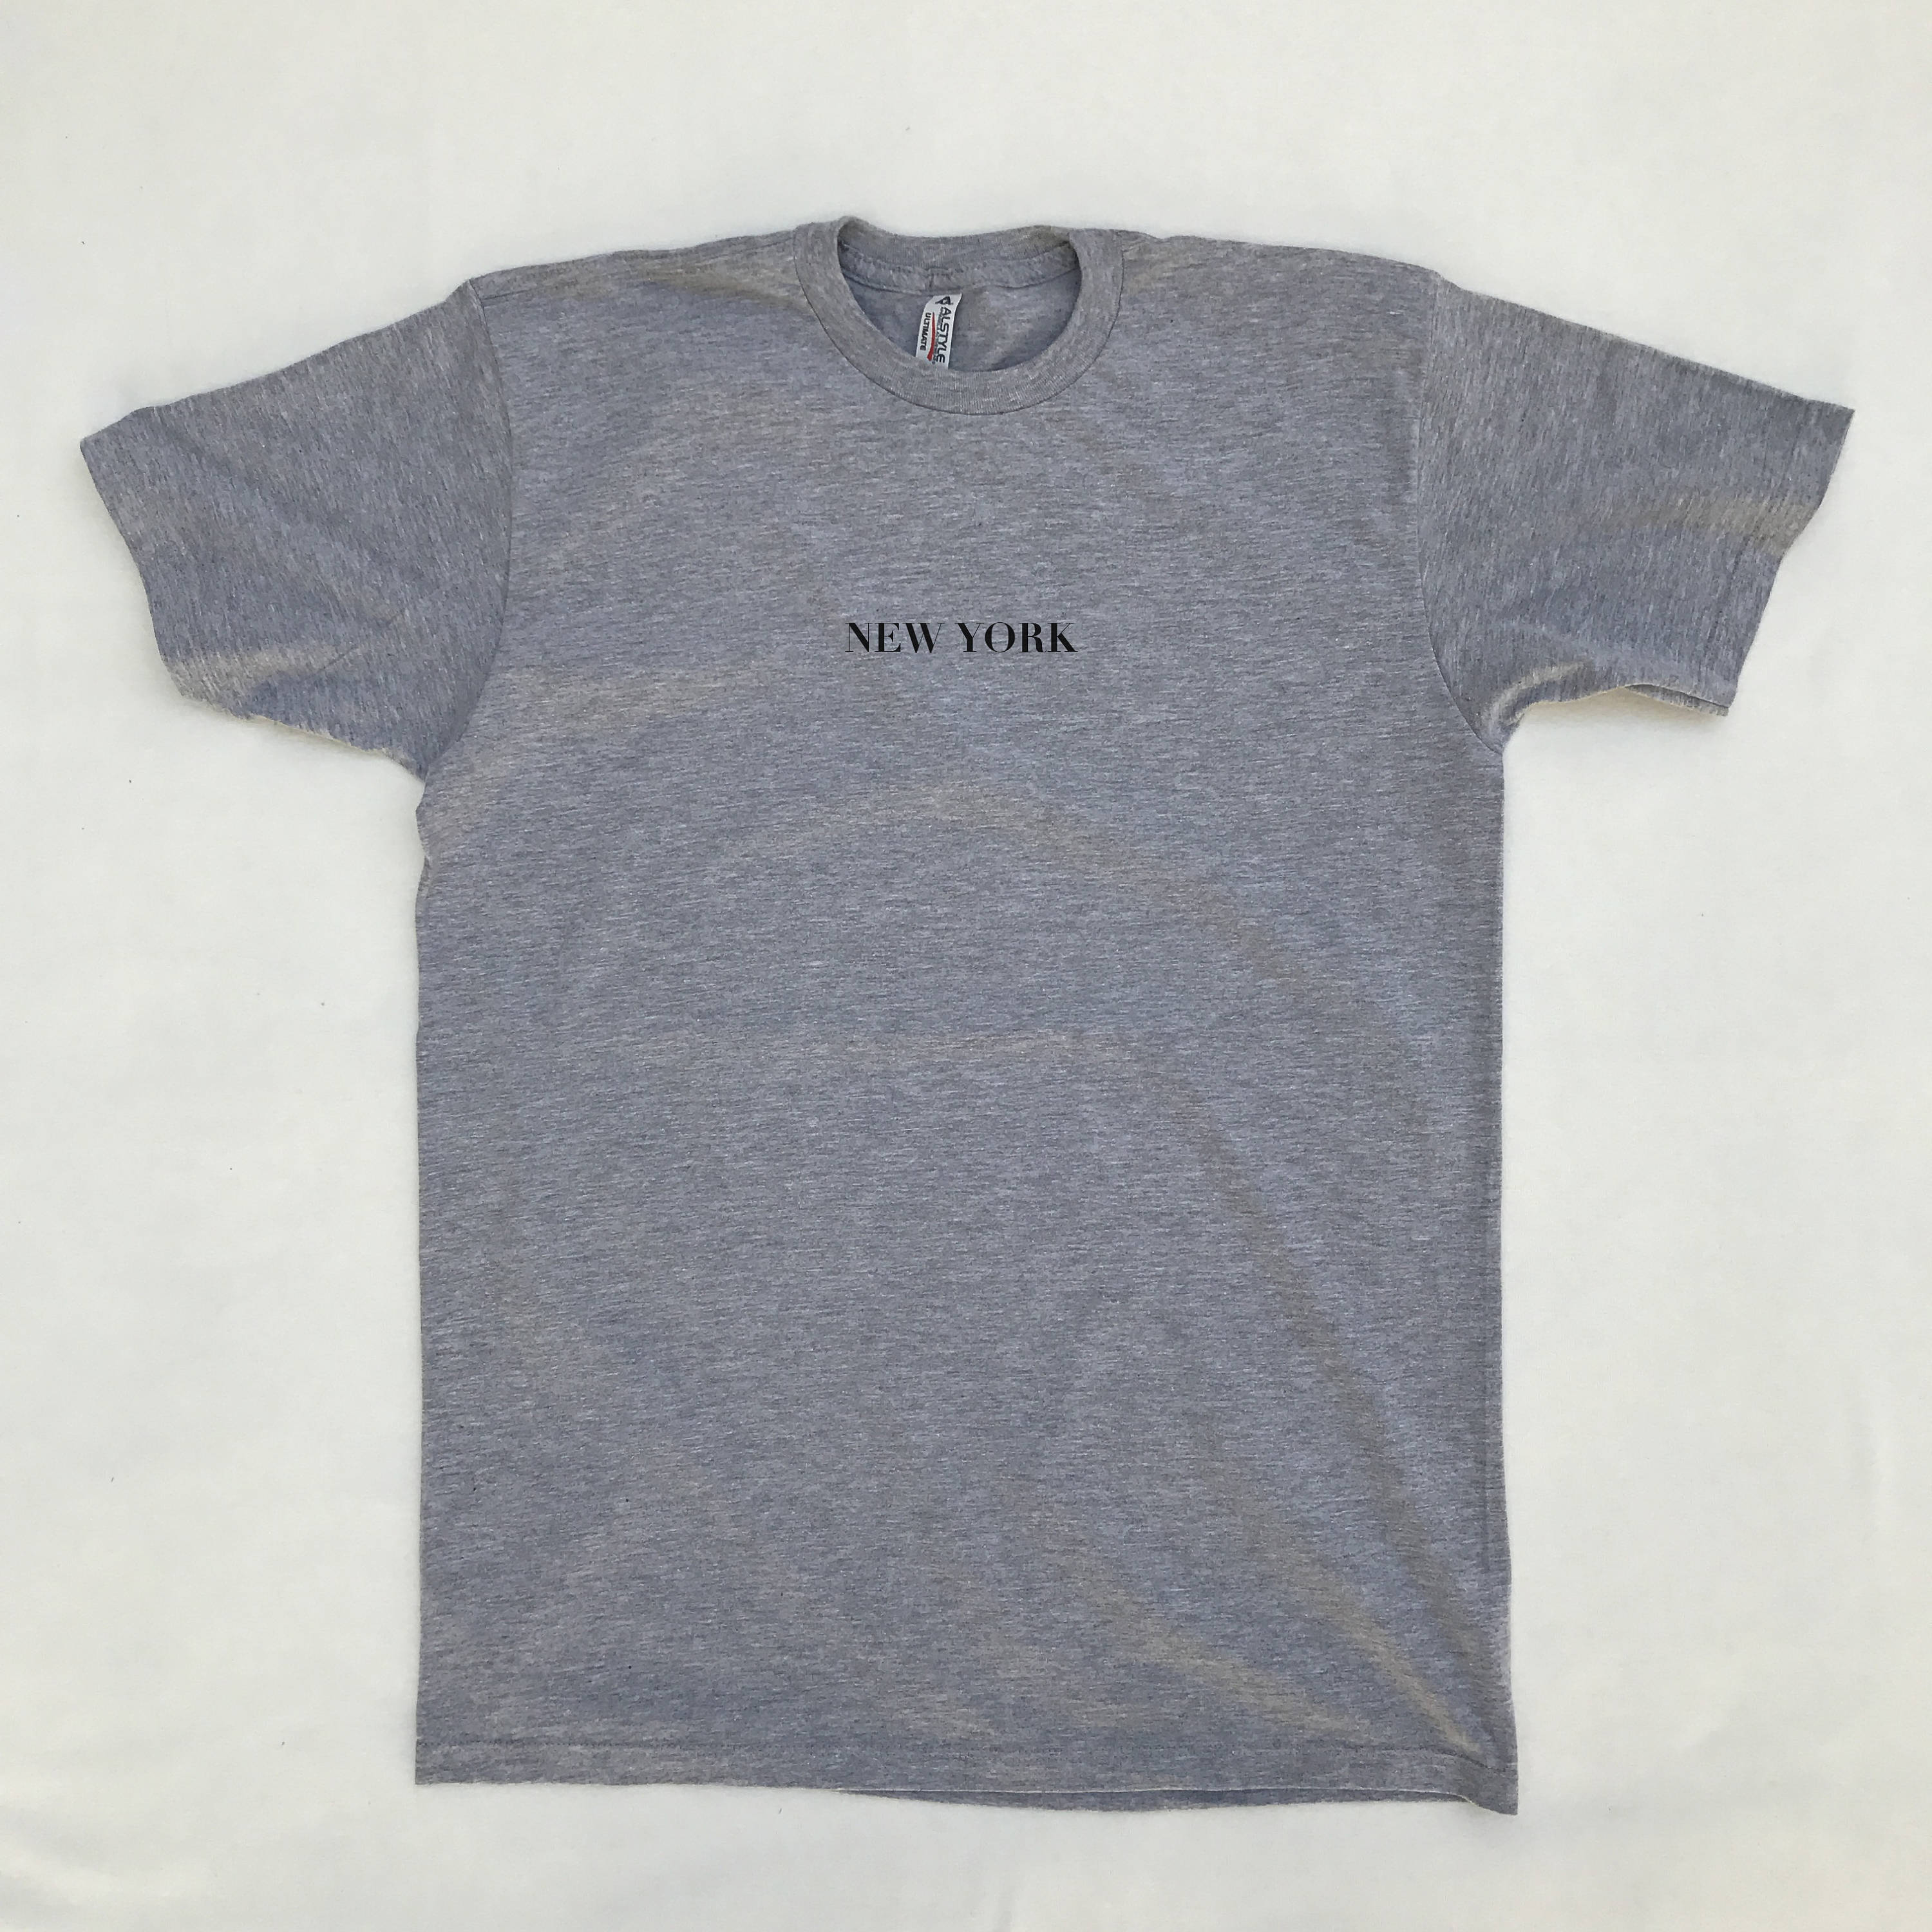 New York T-Shirt New York Shirts NY Shirt Shirts With | Etsy